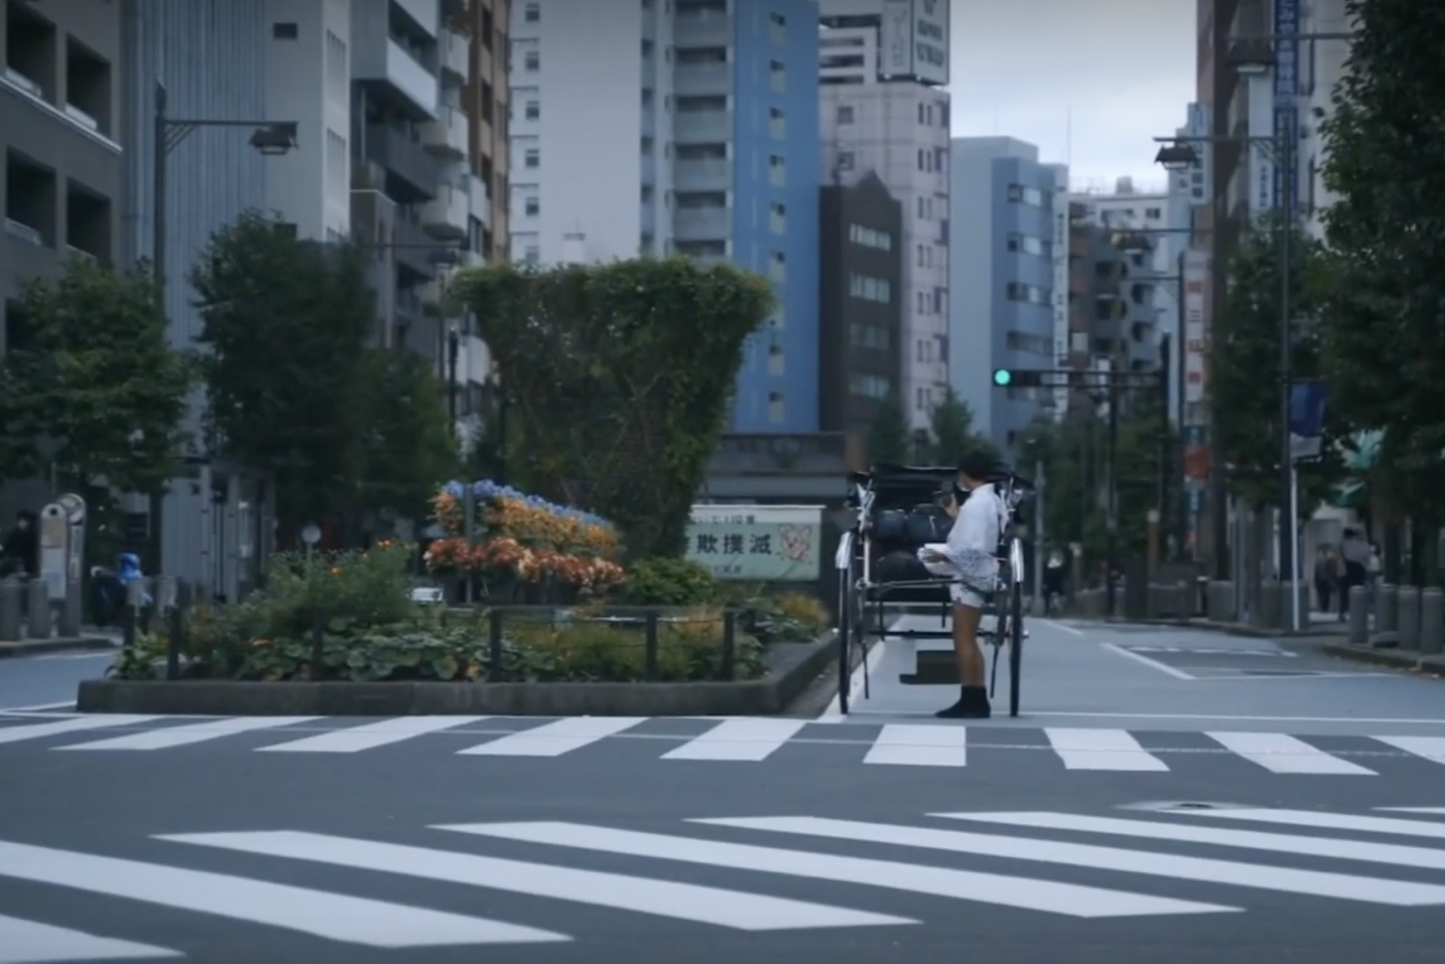 RUN - 人力車日本縦断3000kmの旅ドキュメンタリー (オンライン視聴)